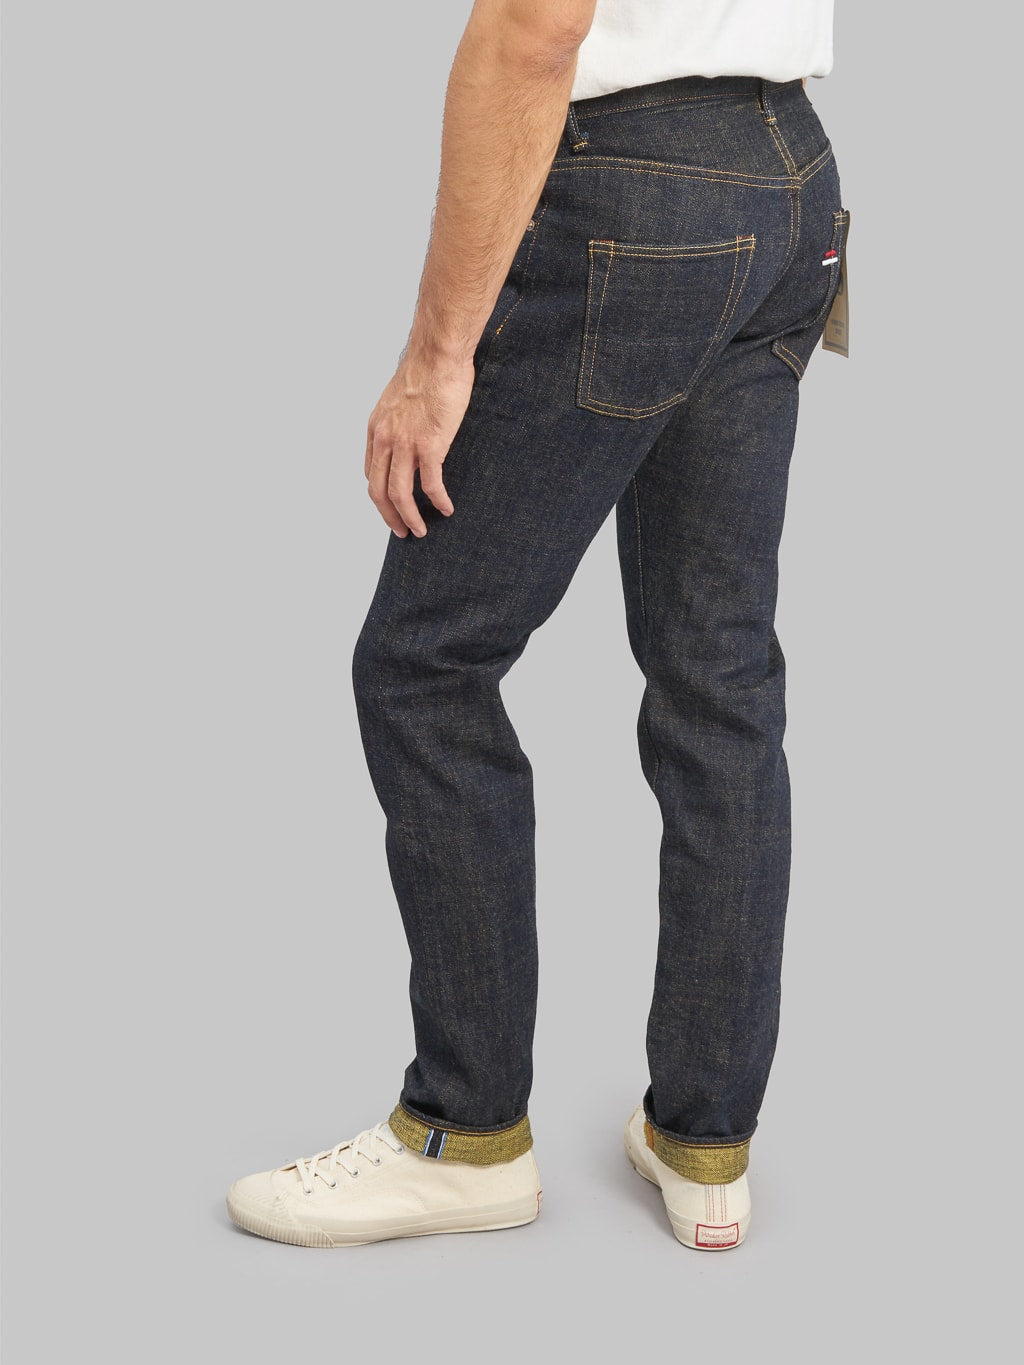 Tanuki "Soga" 15oz High Tapered Jeans